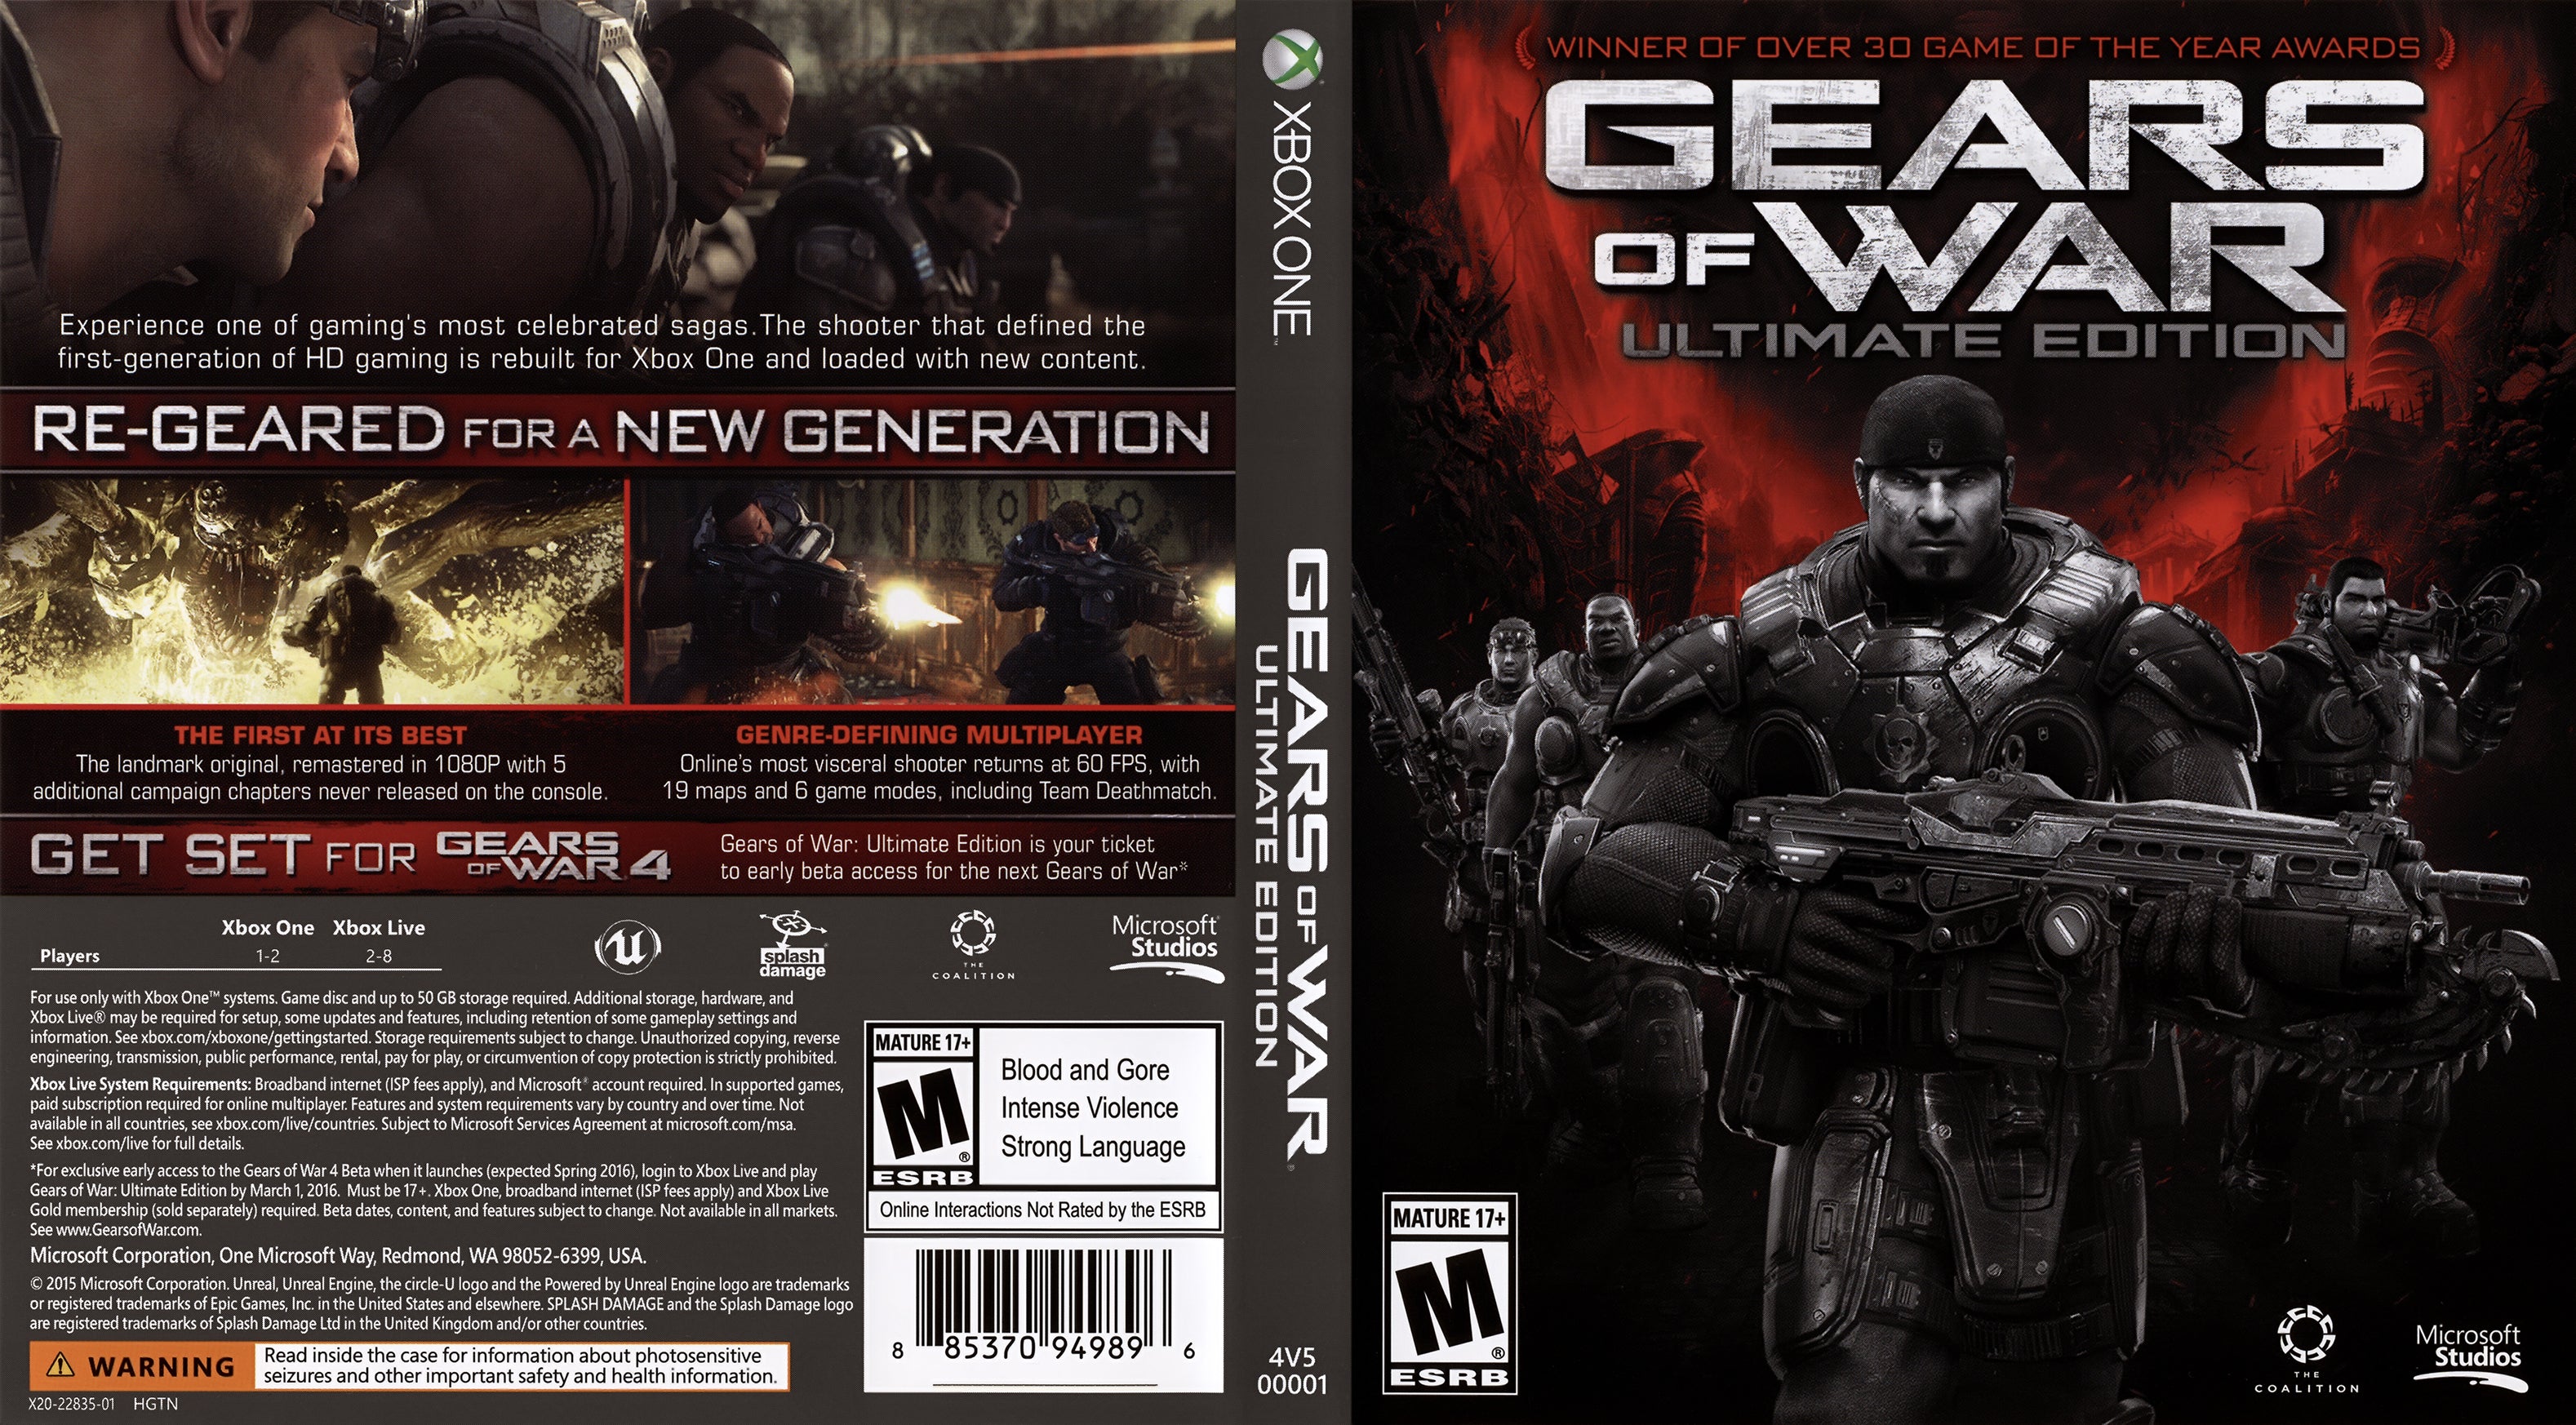 gears of war 4 Xbox one original